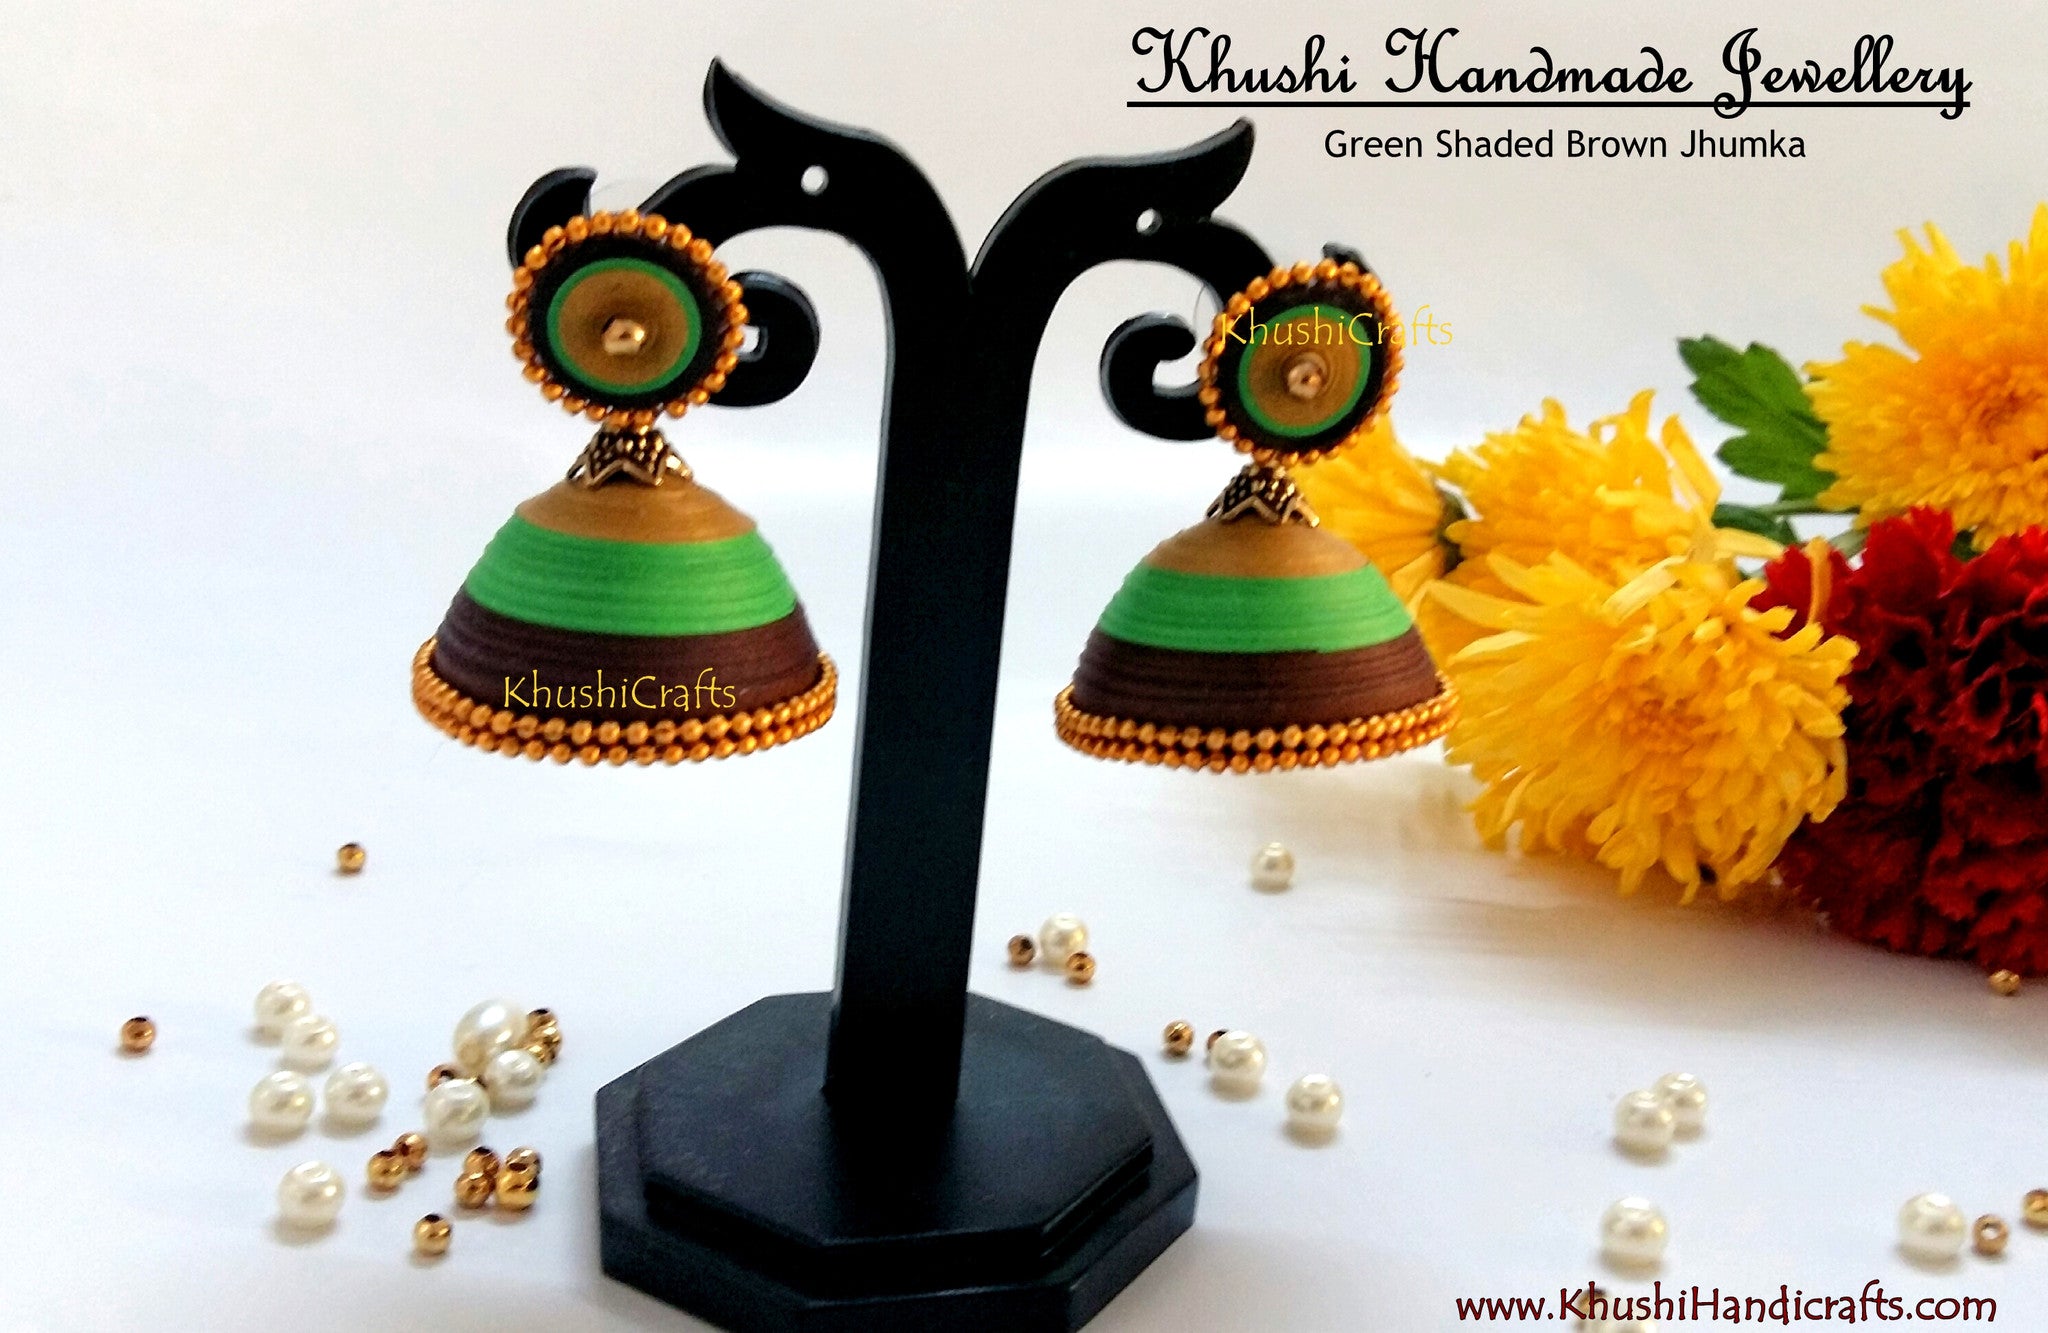 Green Shaded Brown Jhumka - Khushi Handmade Jewellery